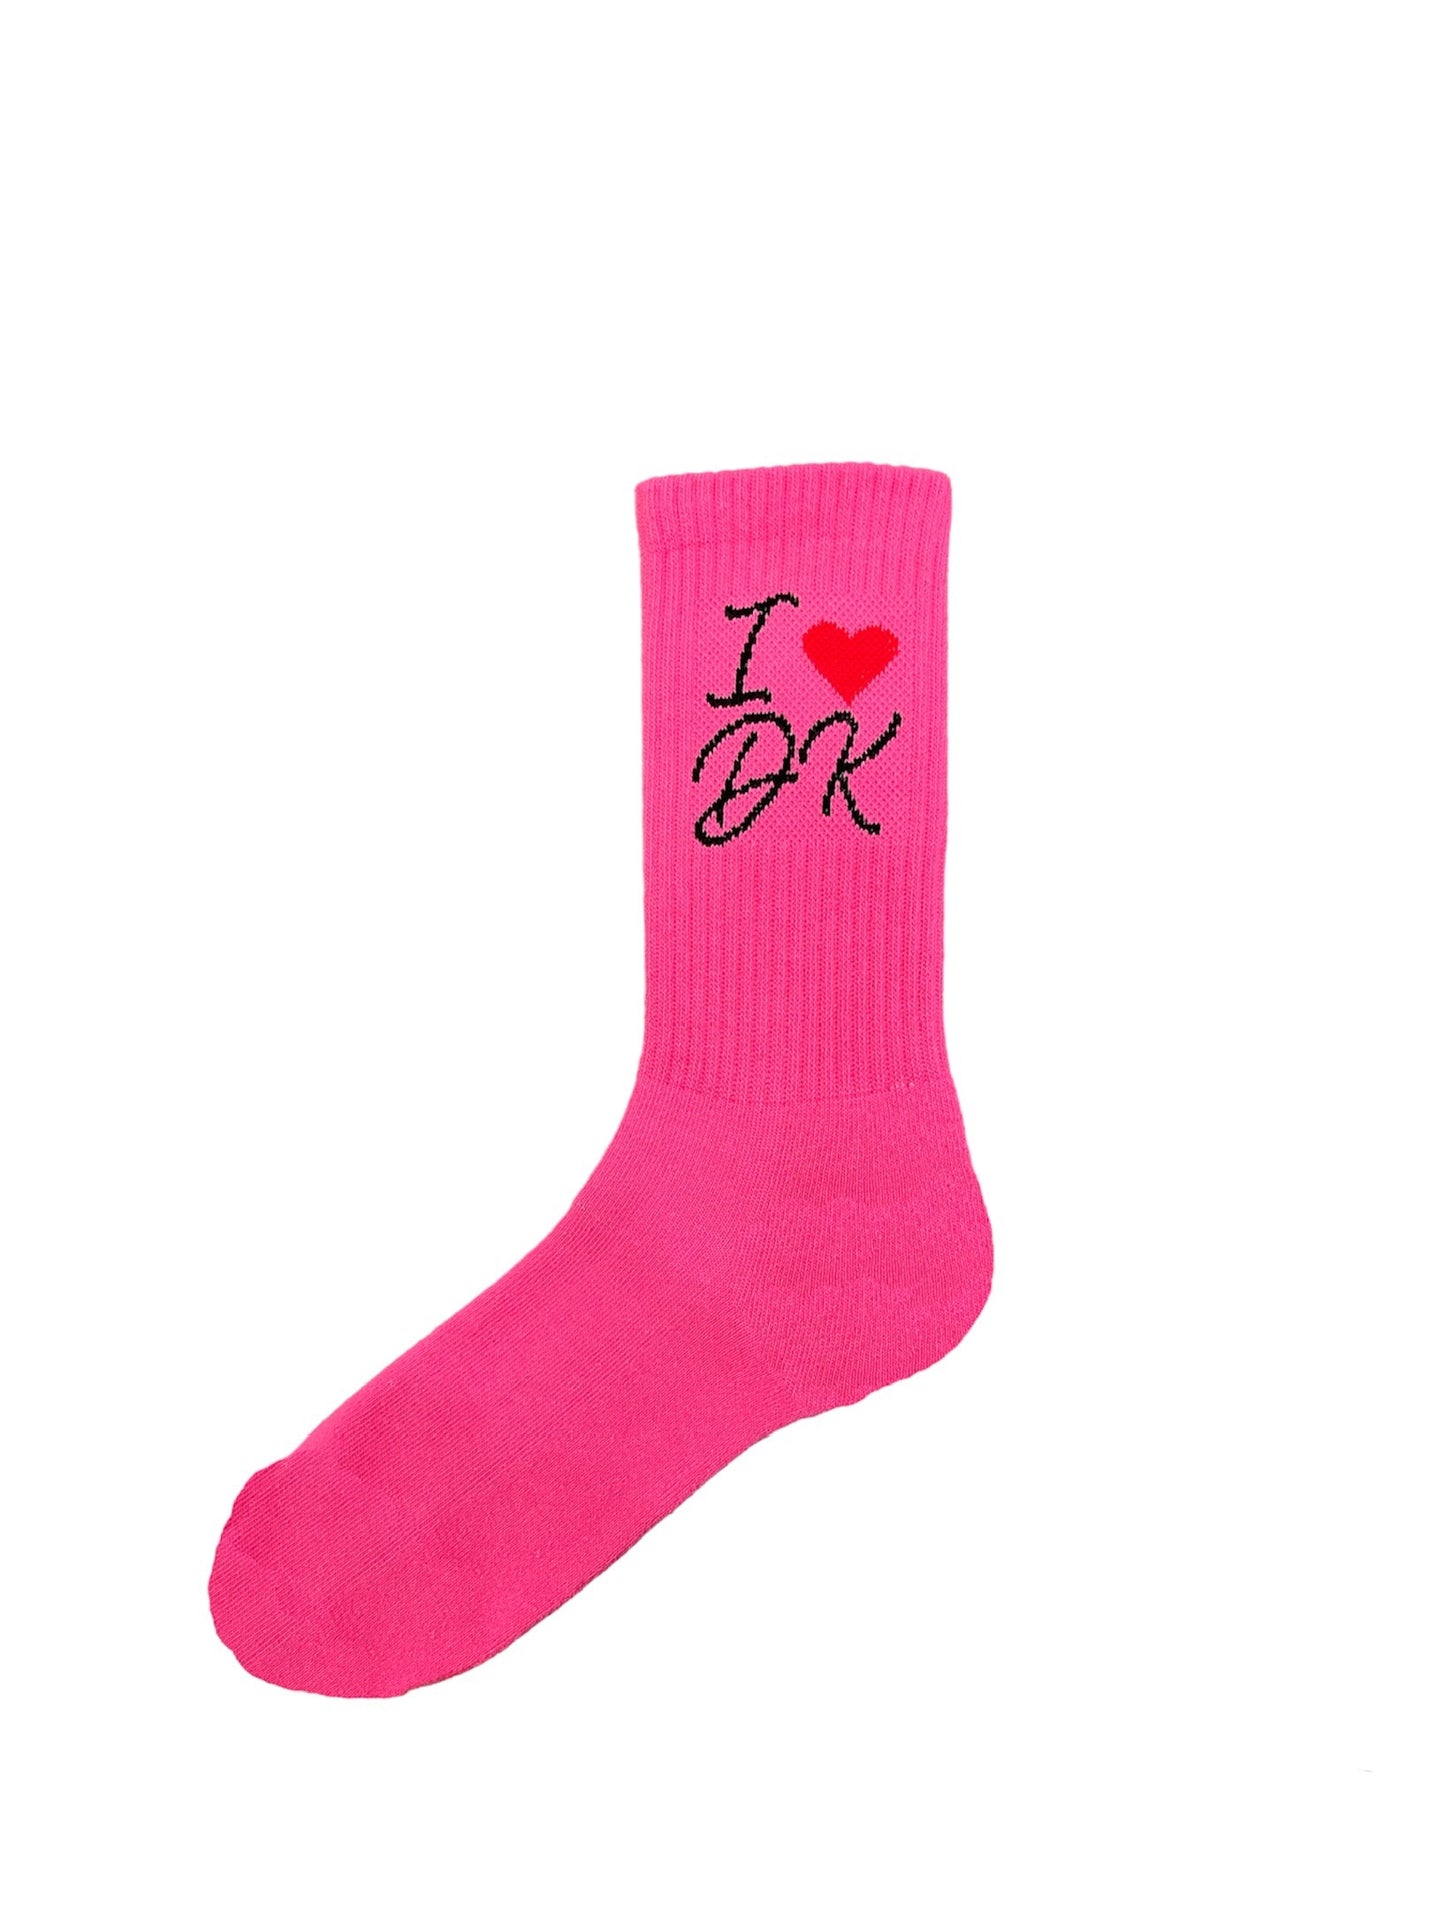 I ❤️ DK Socks (Pink)